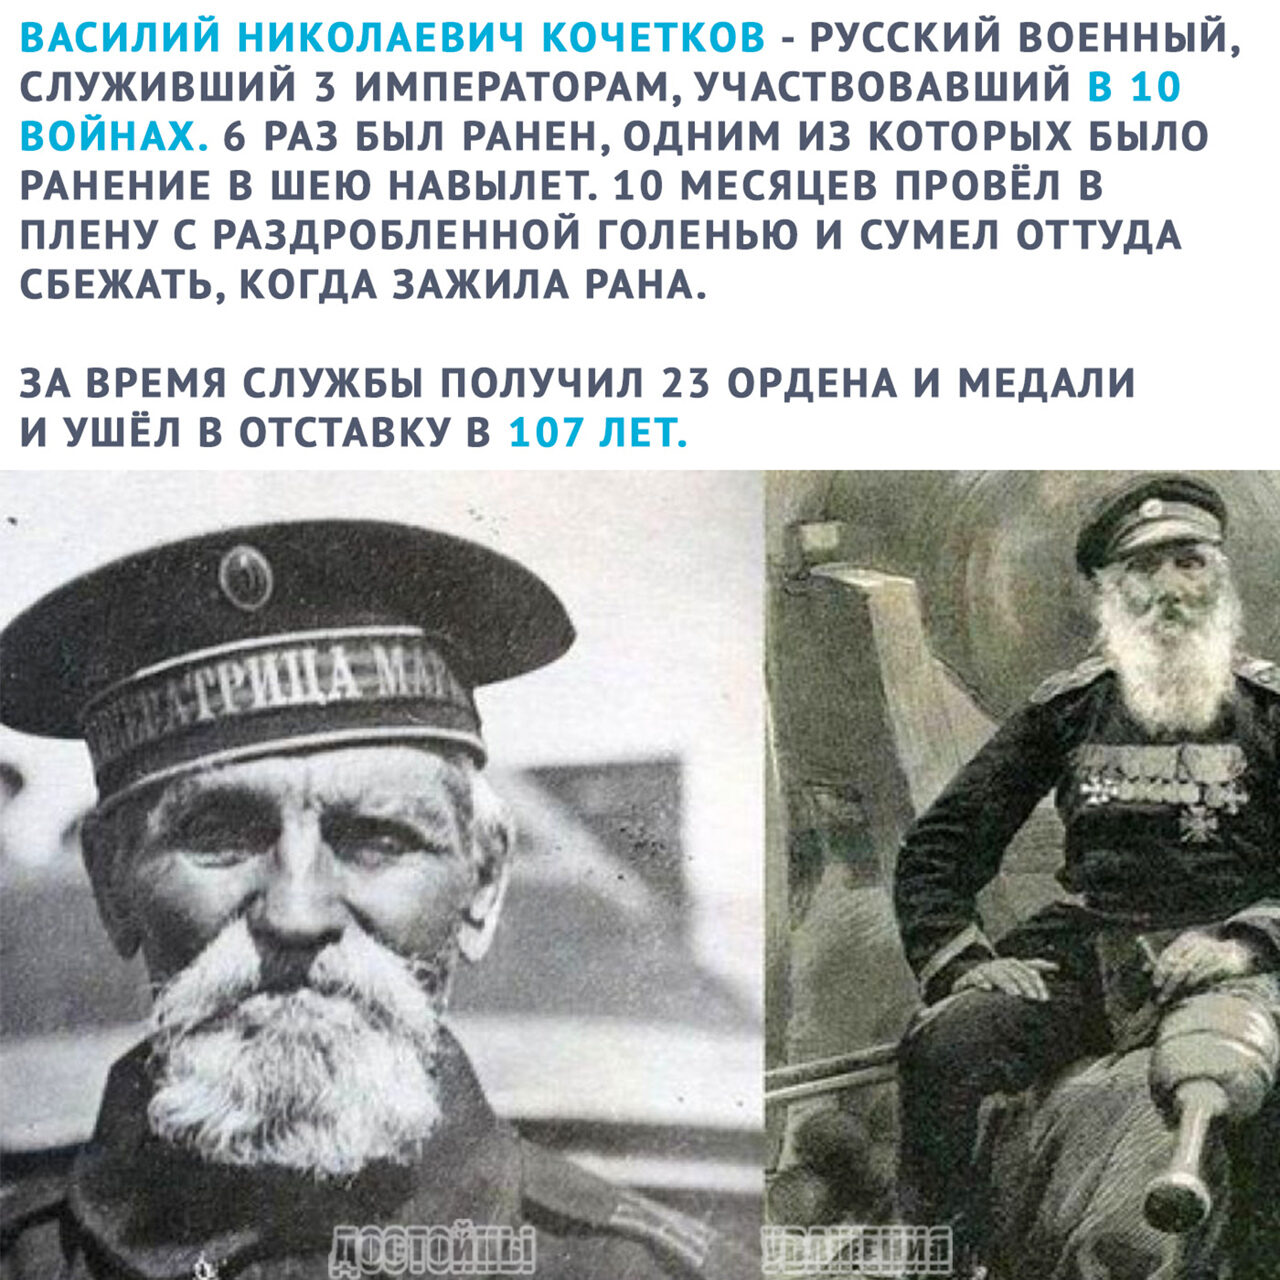 Василий Кочетков солдат трех